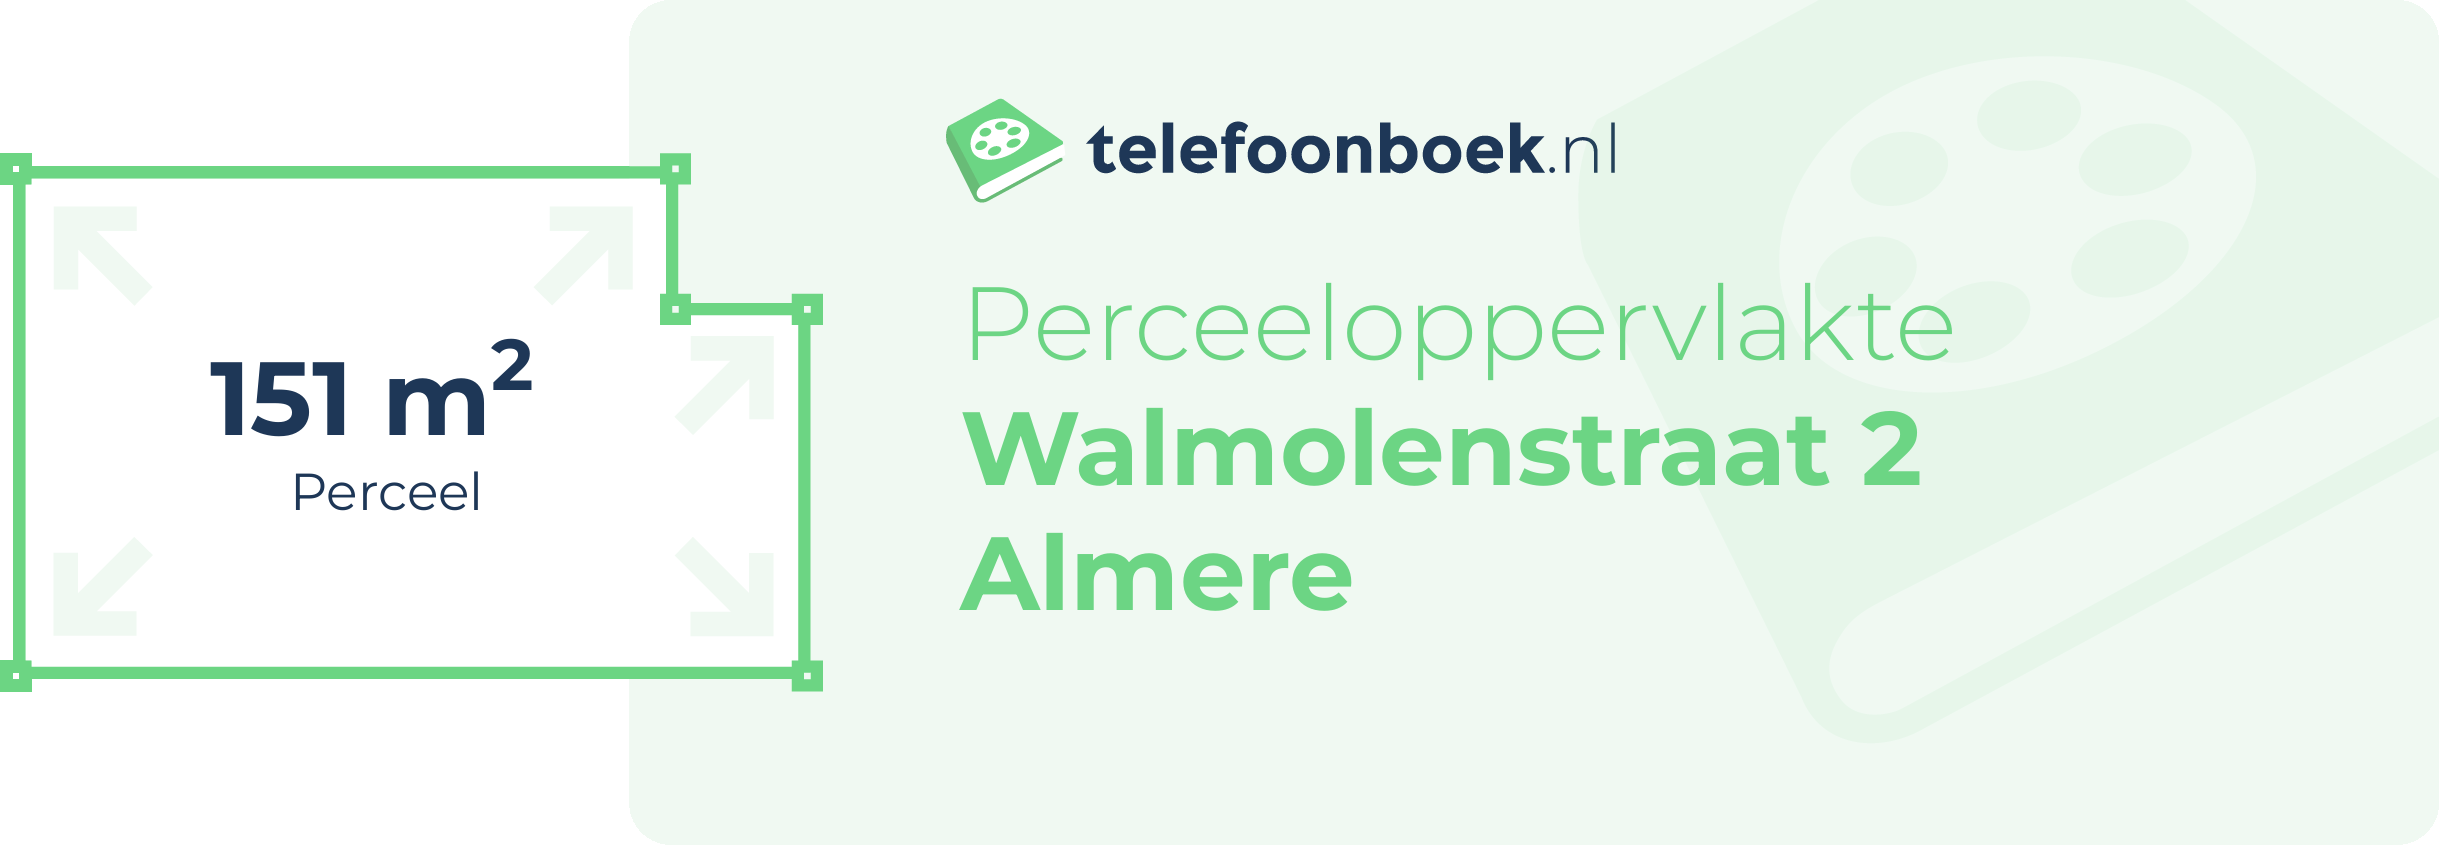 Perceeloppervlakte Walmolenstraat 2 Almere